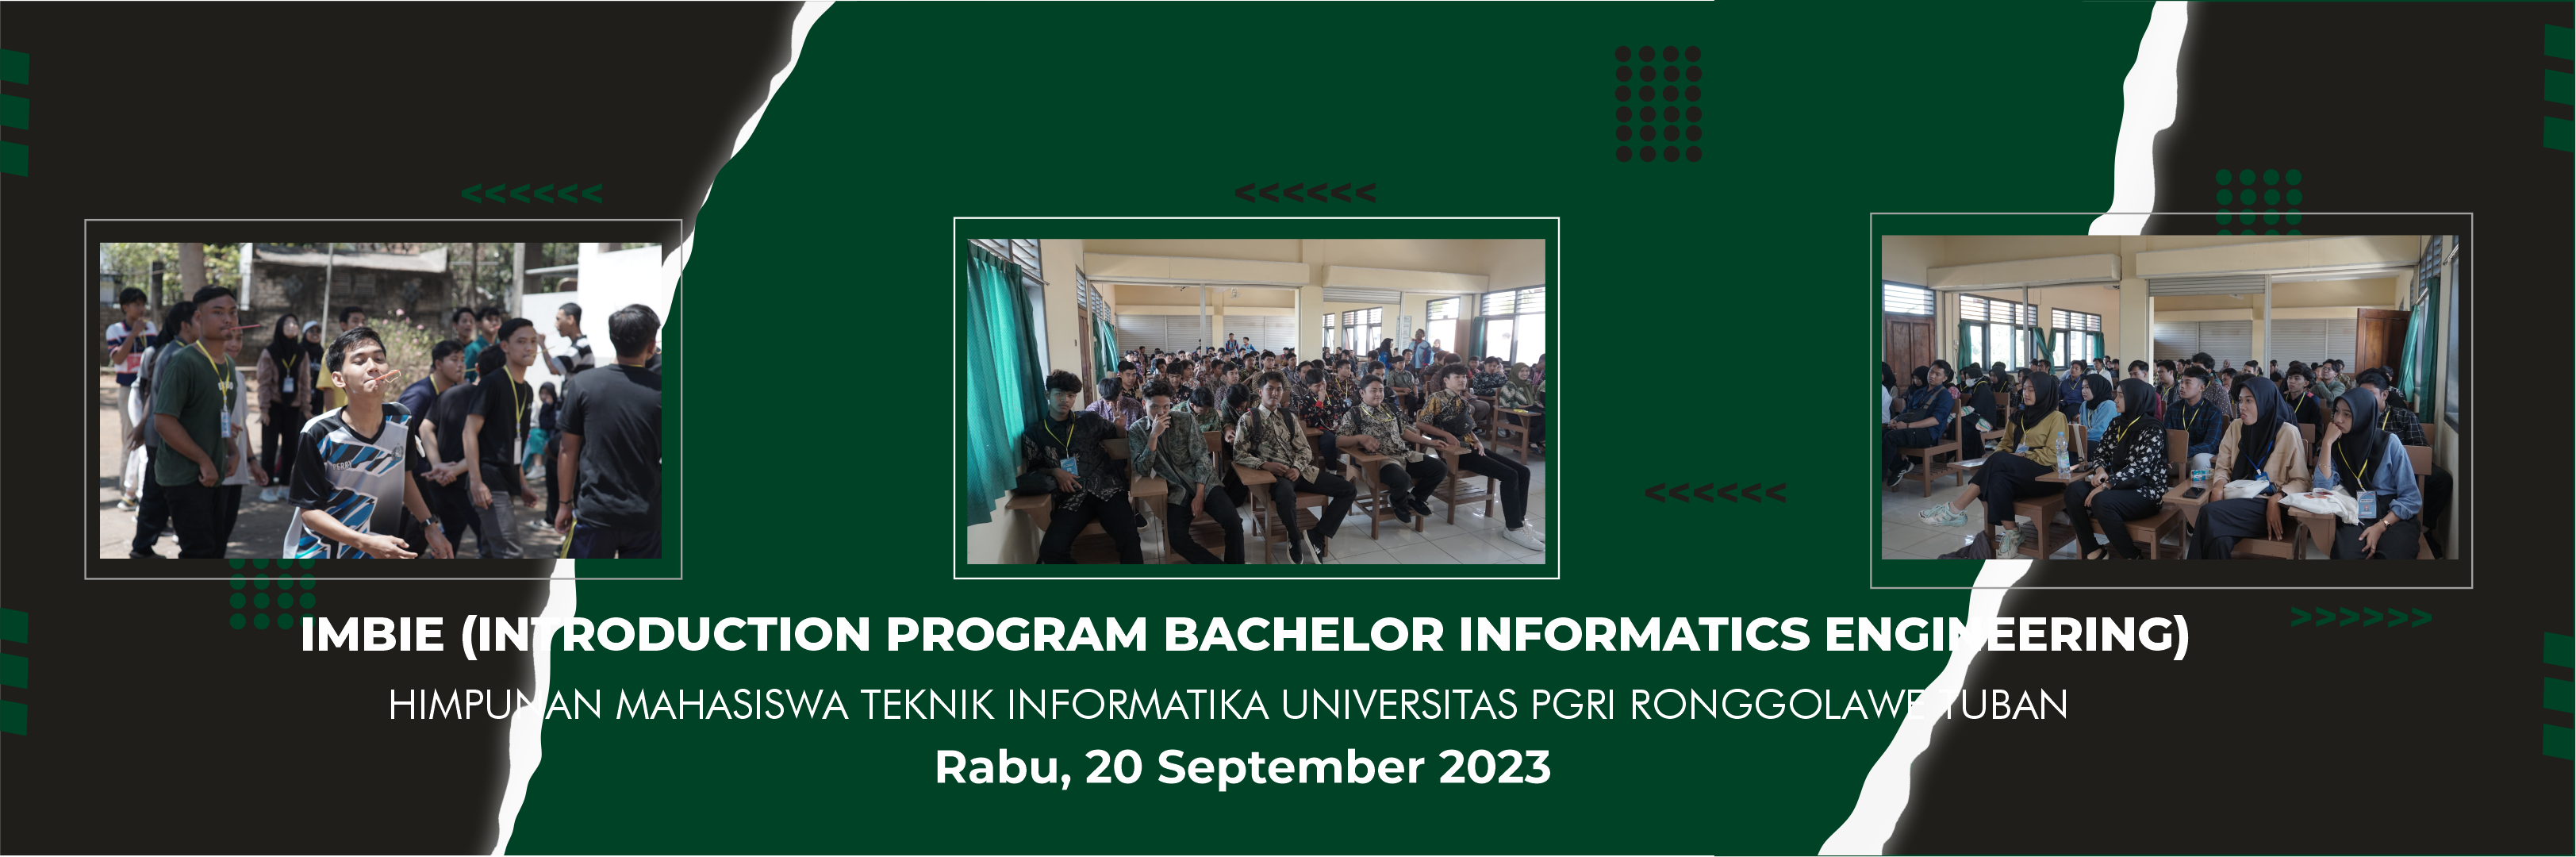 Mahasiswa Baru Program Studi Teknik Informatika Angkatan 2023 Jalani Kegiatan IMBIE Introduction Program Bachelor Informatics Engineering